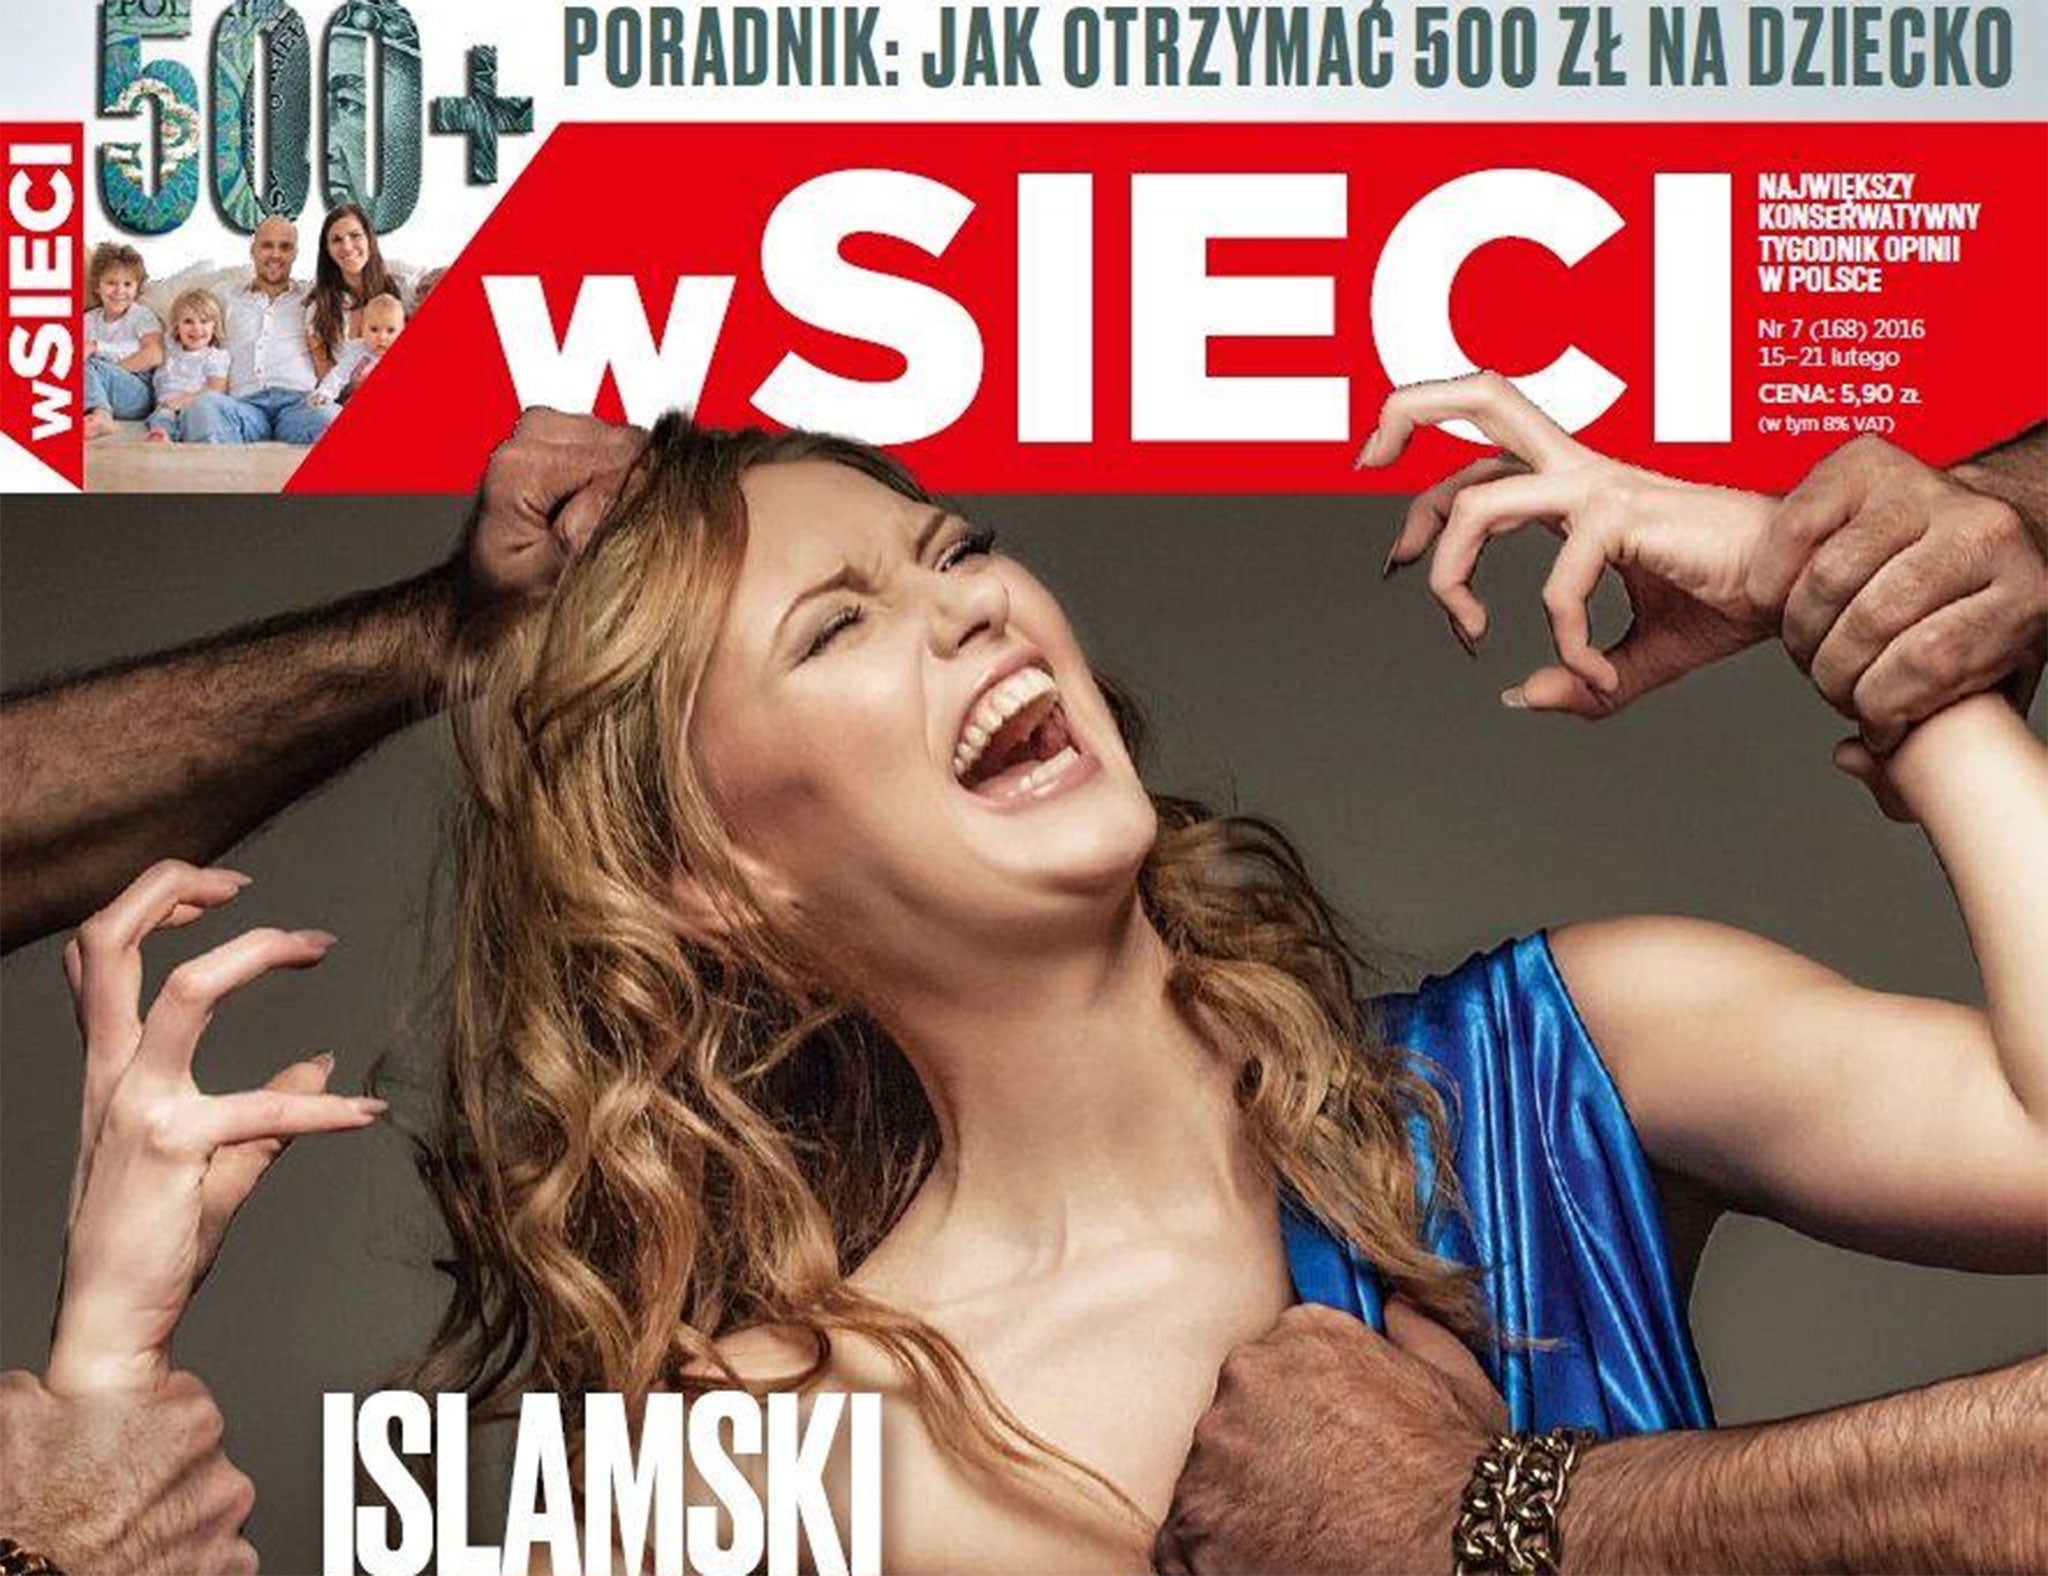 The front page of Polish magazine 'wSieci'